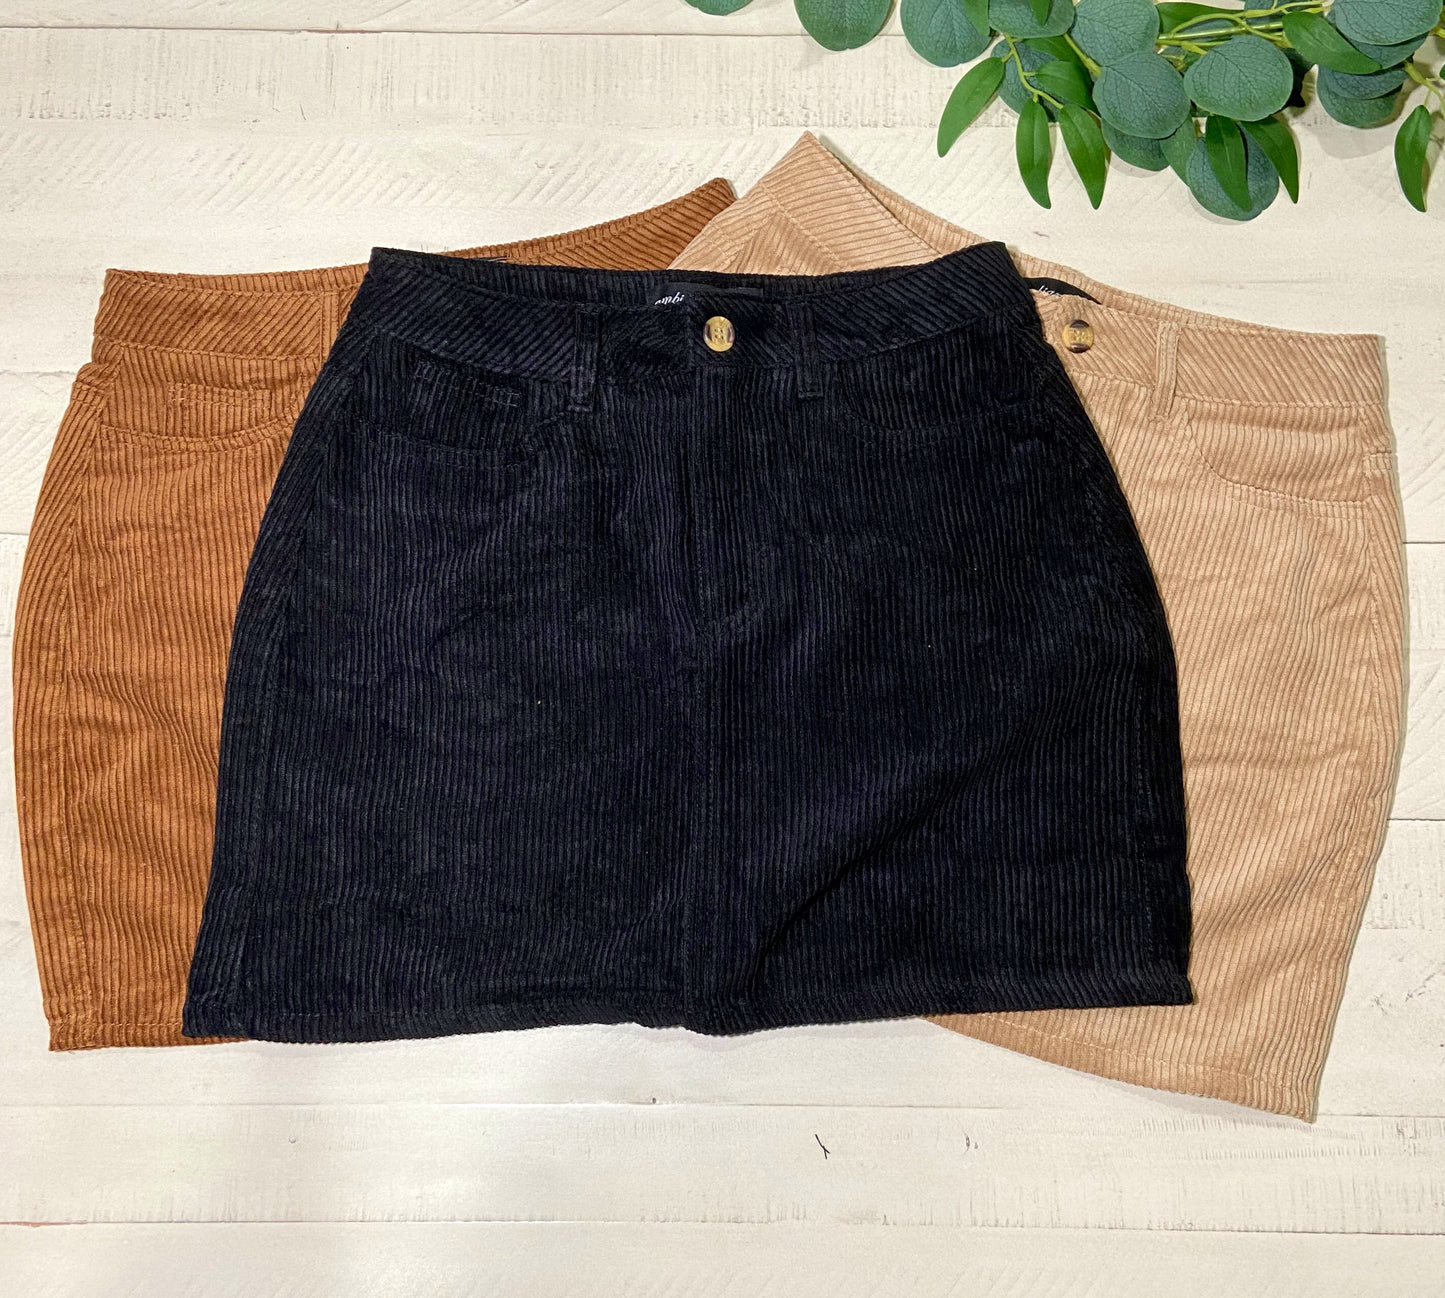 Corduroy Skirt in Tan, Black and Brown